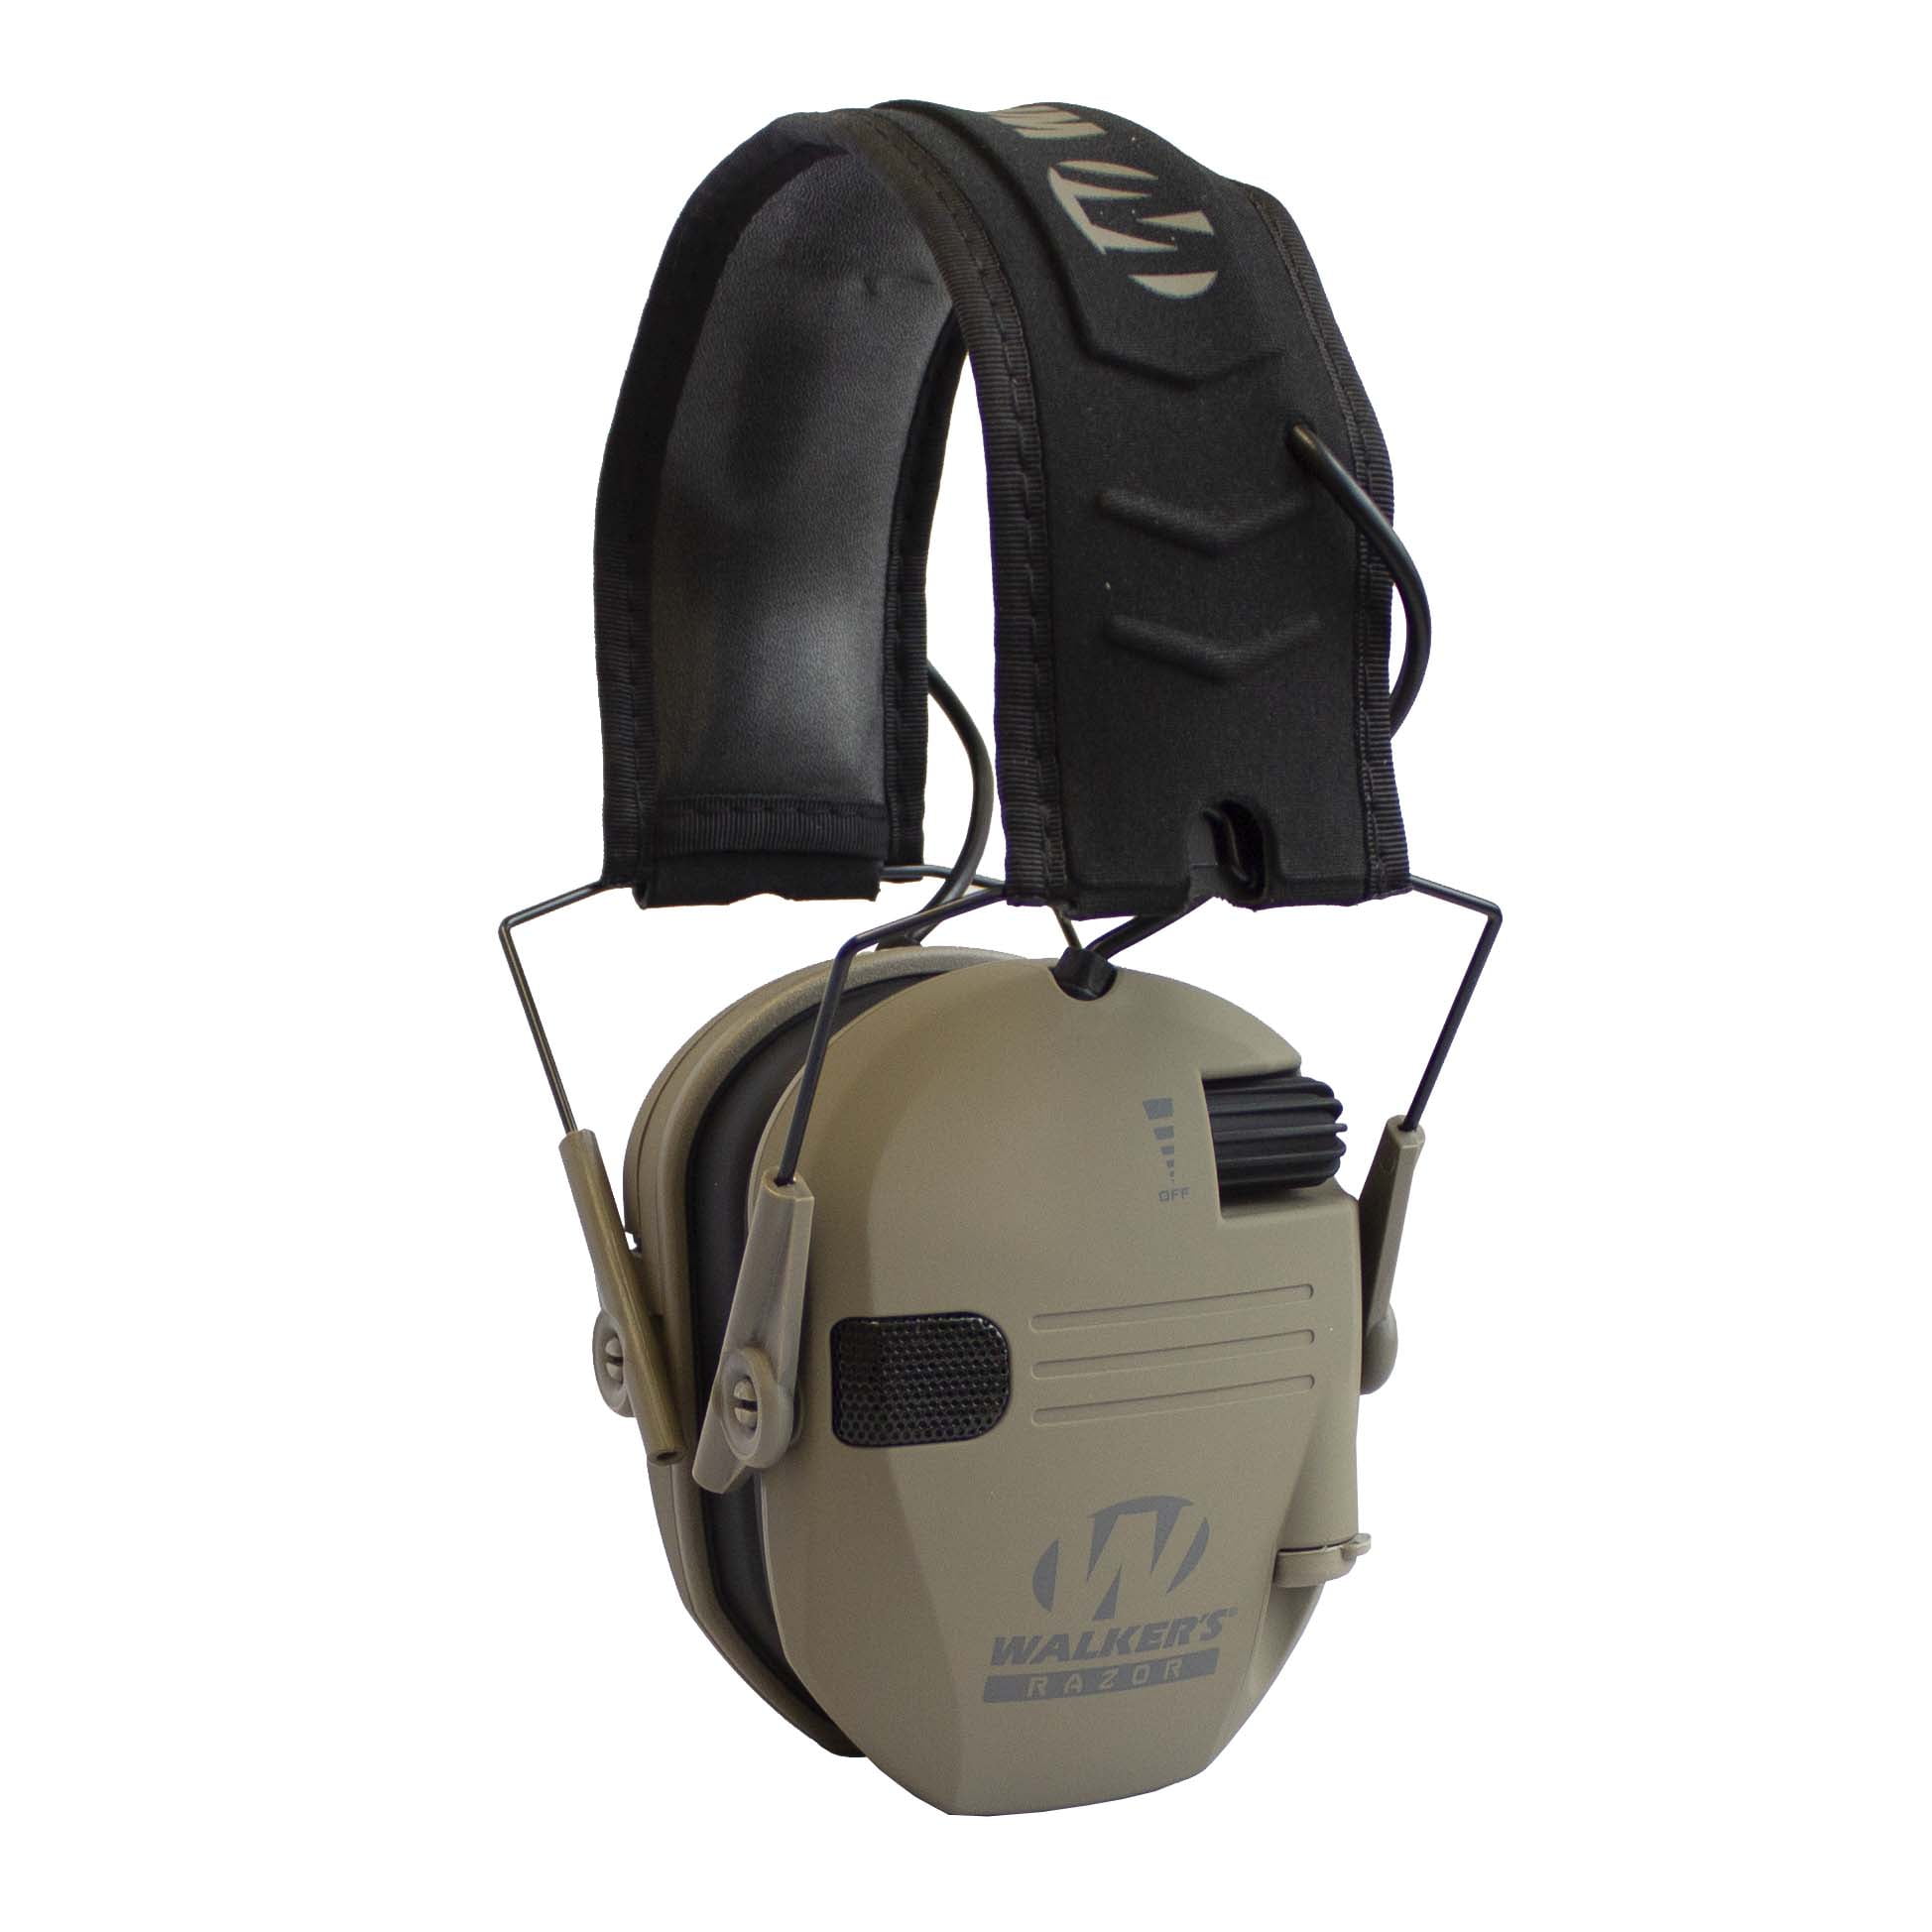 New! Walker's Razor Slim Folding Protection Electronic Shooting Ear Muffs